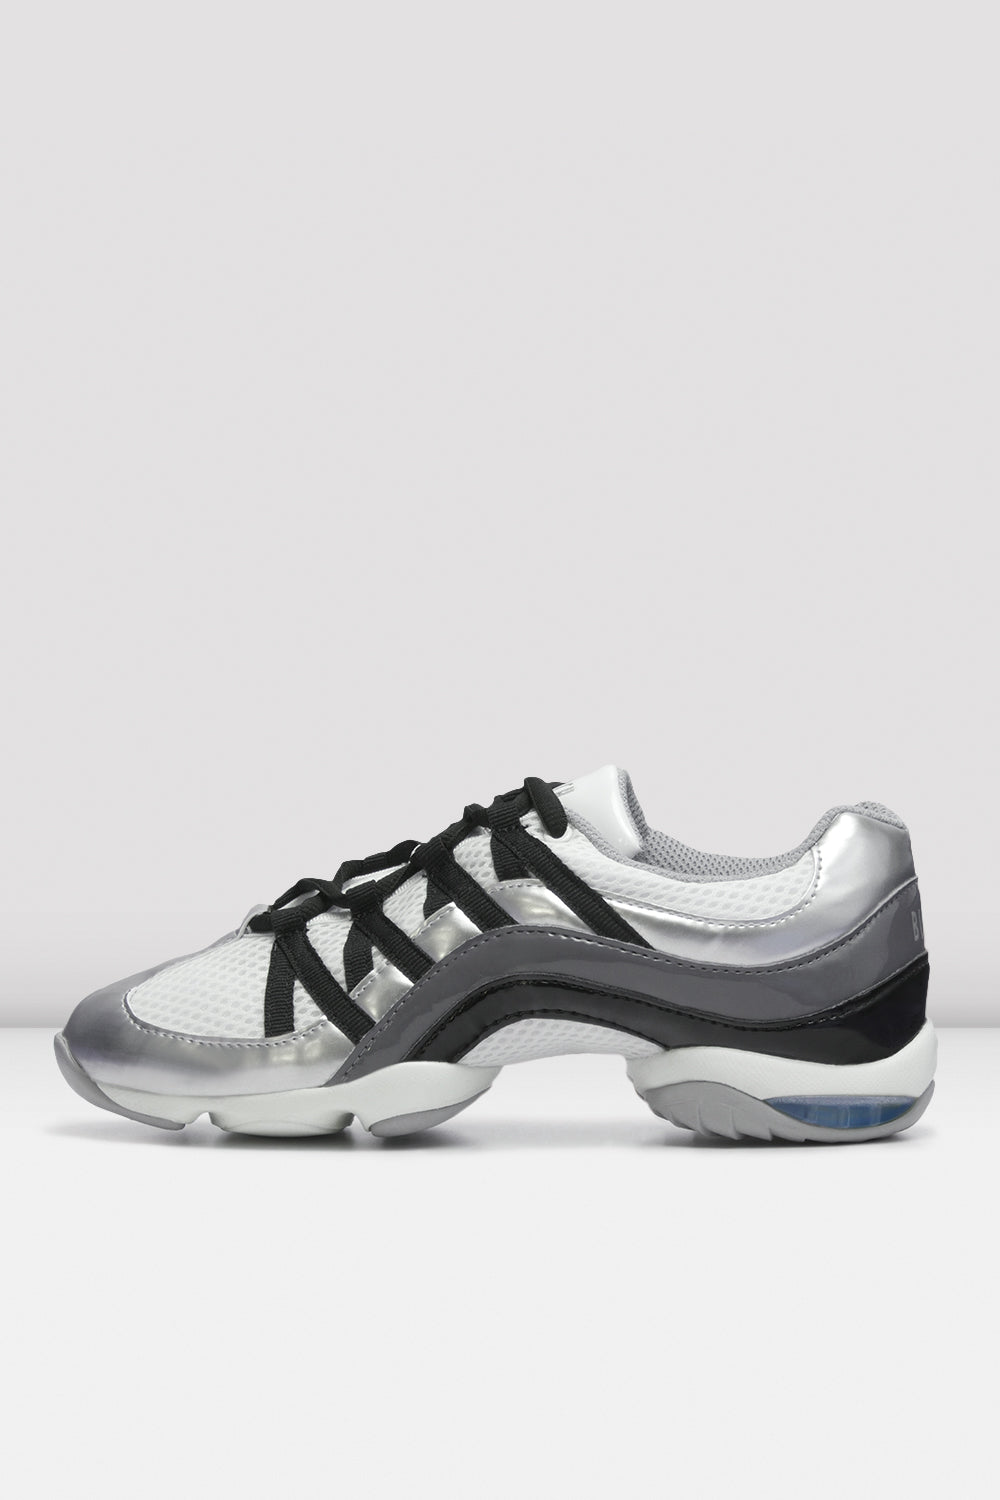 silver dance sneakers